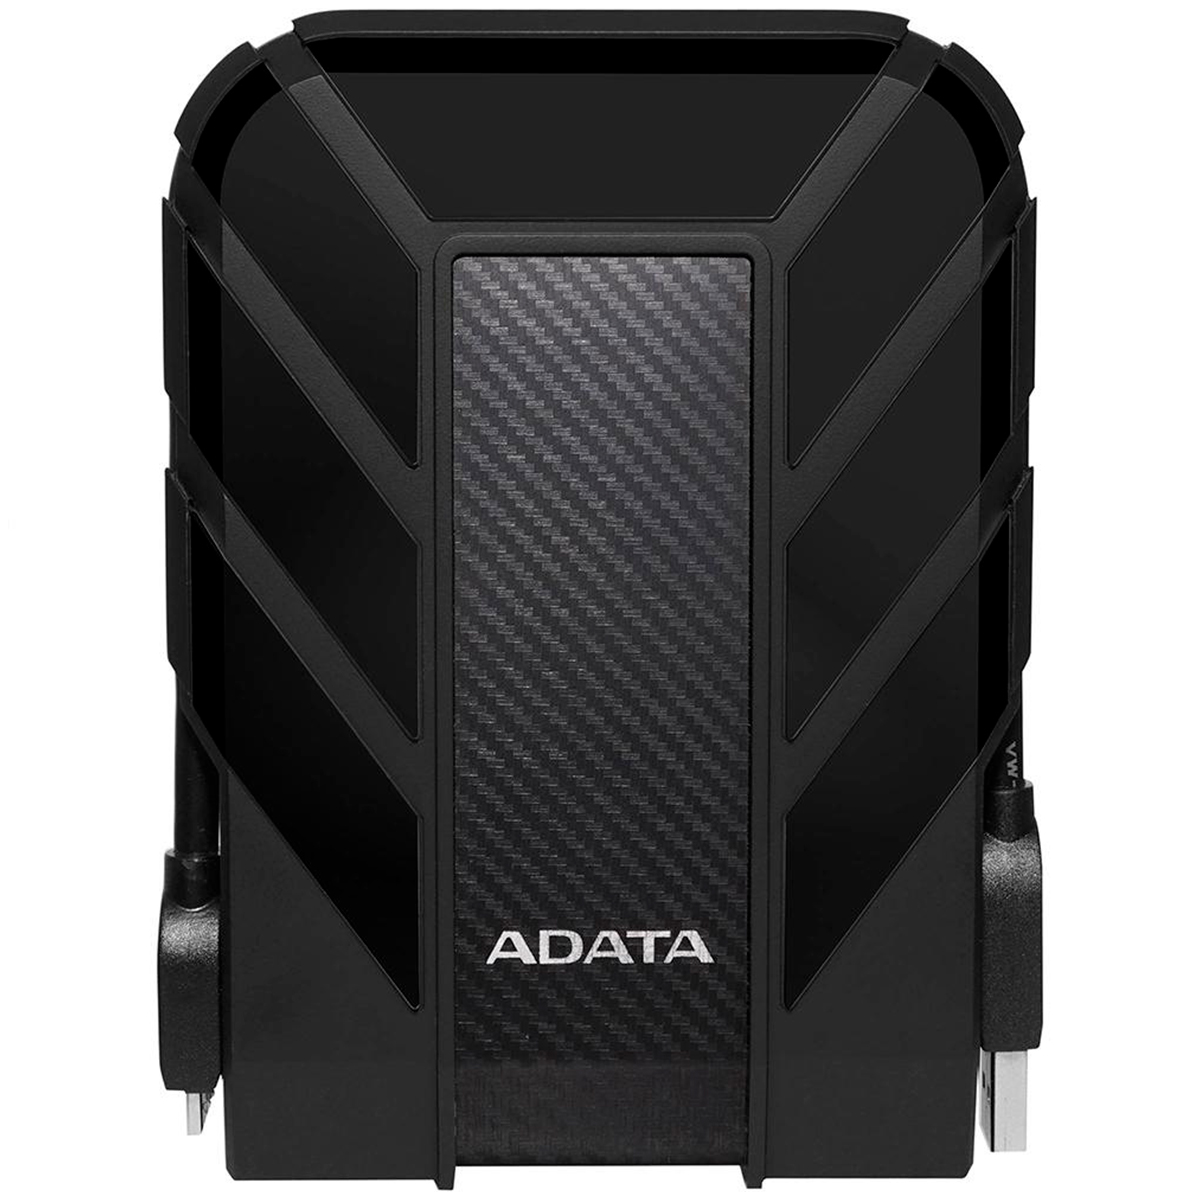 HD Externo 1TB Portátil Adata HD710 Pro - USB 3.2 - À Prova D`água - Anti-Queda - AHD710P-1TU31-CBK